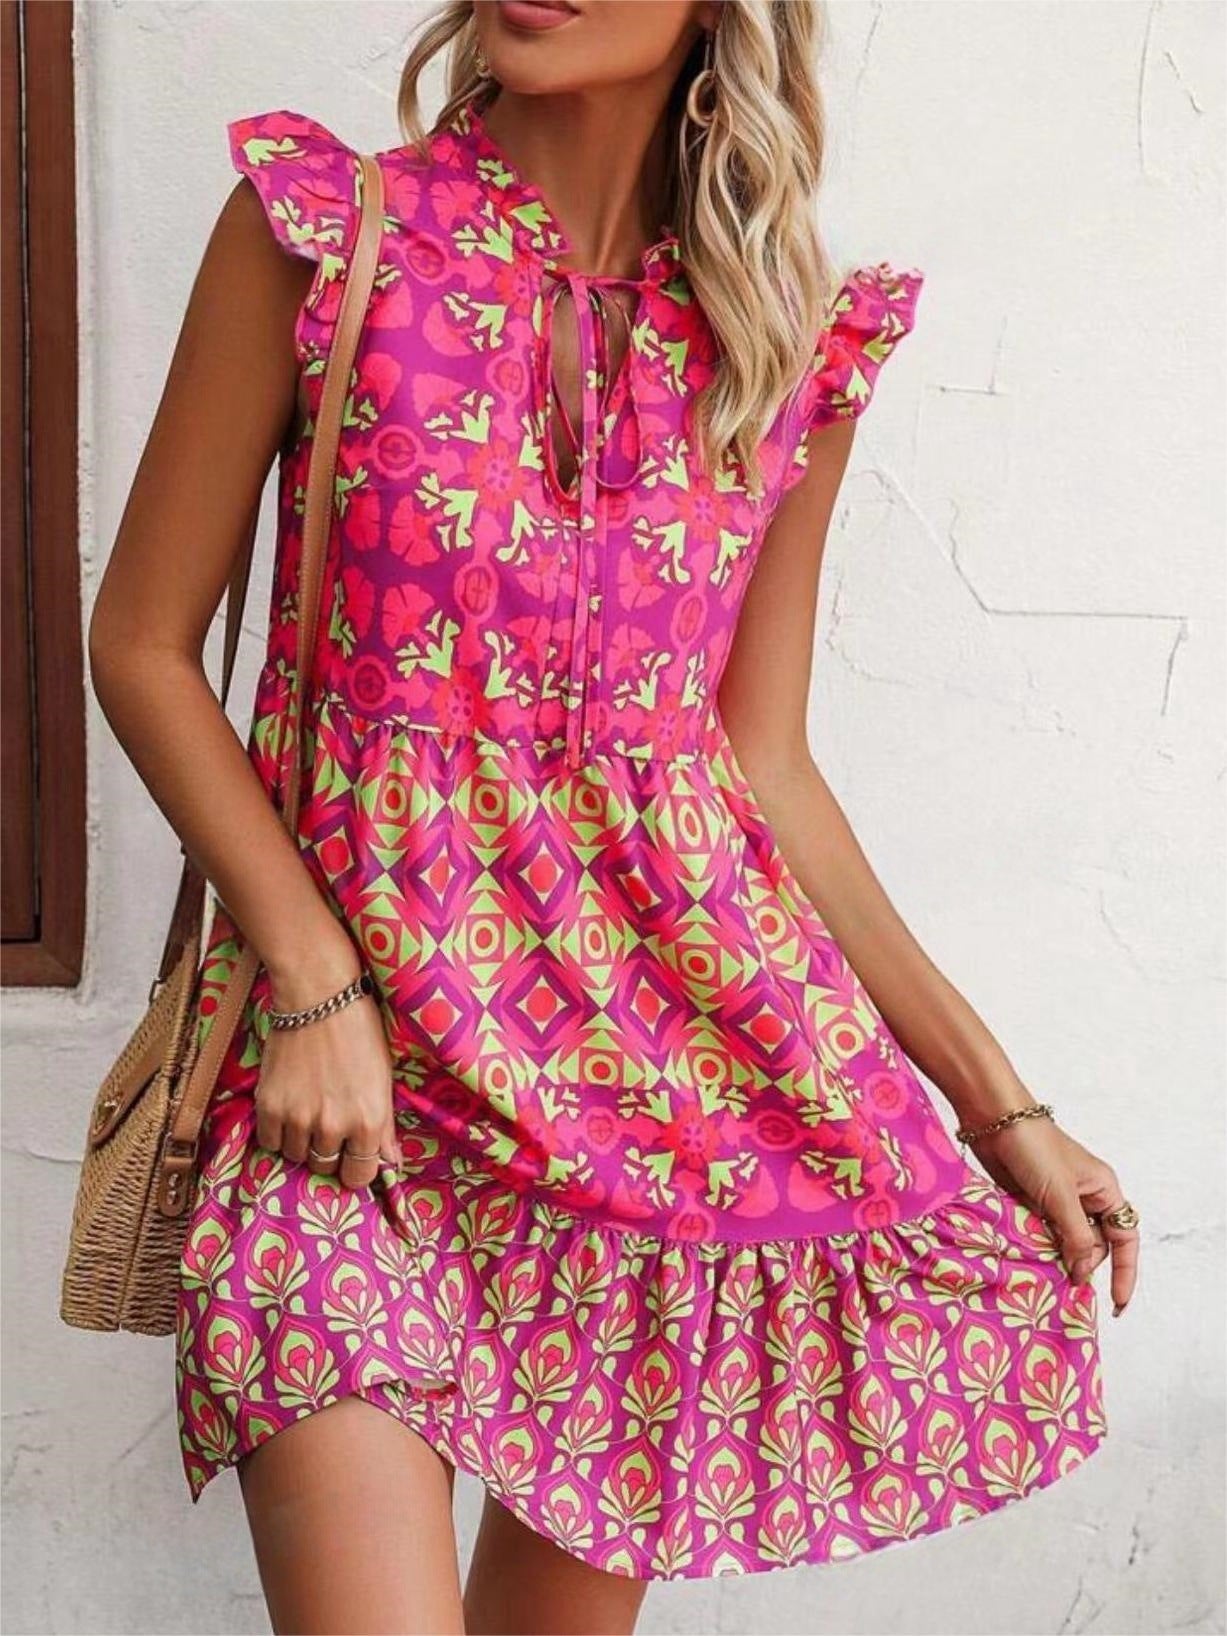 Nextthink Mouwloze jurk met print, zomermode - NextthinkShop0CJLY205743303CX0